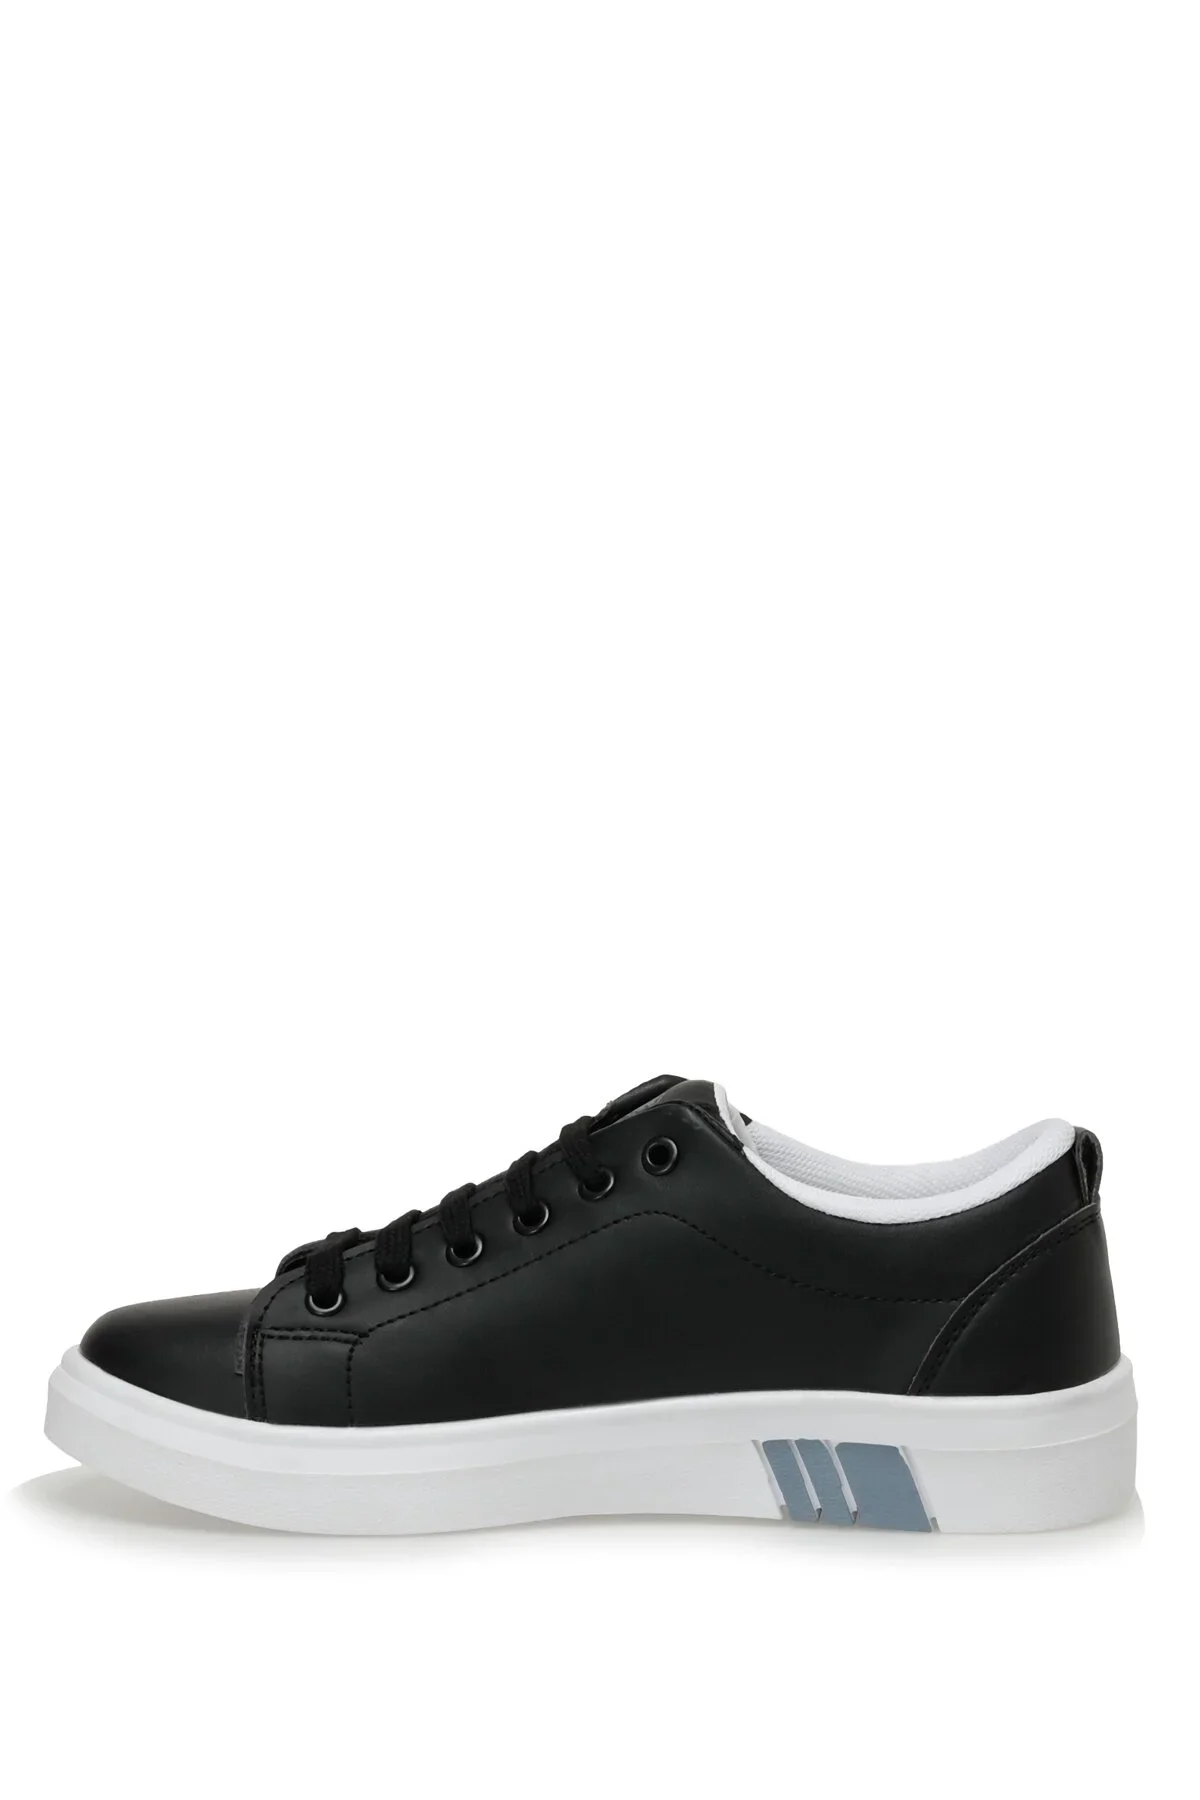 TINA 3FX Kadın Sneaker Spor Ayakkabı-Siyah - 3